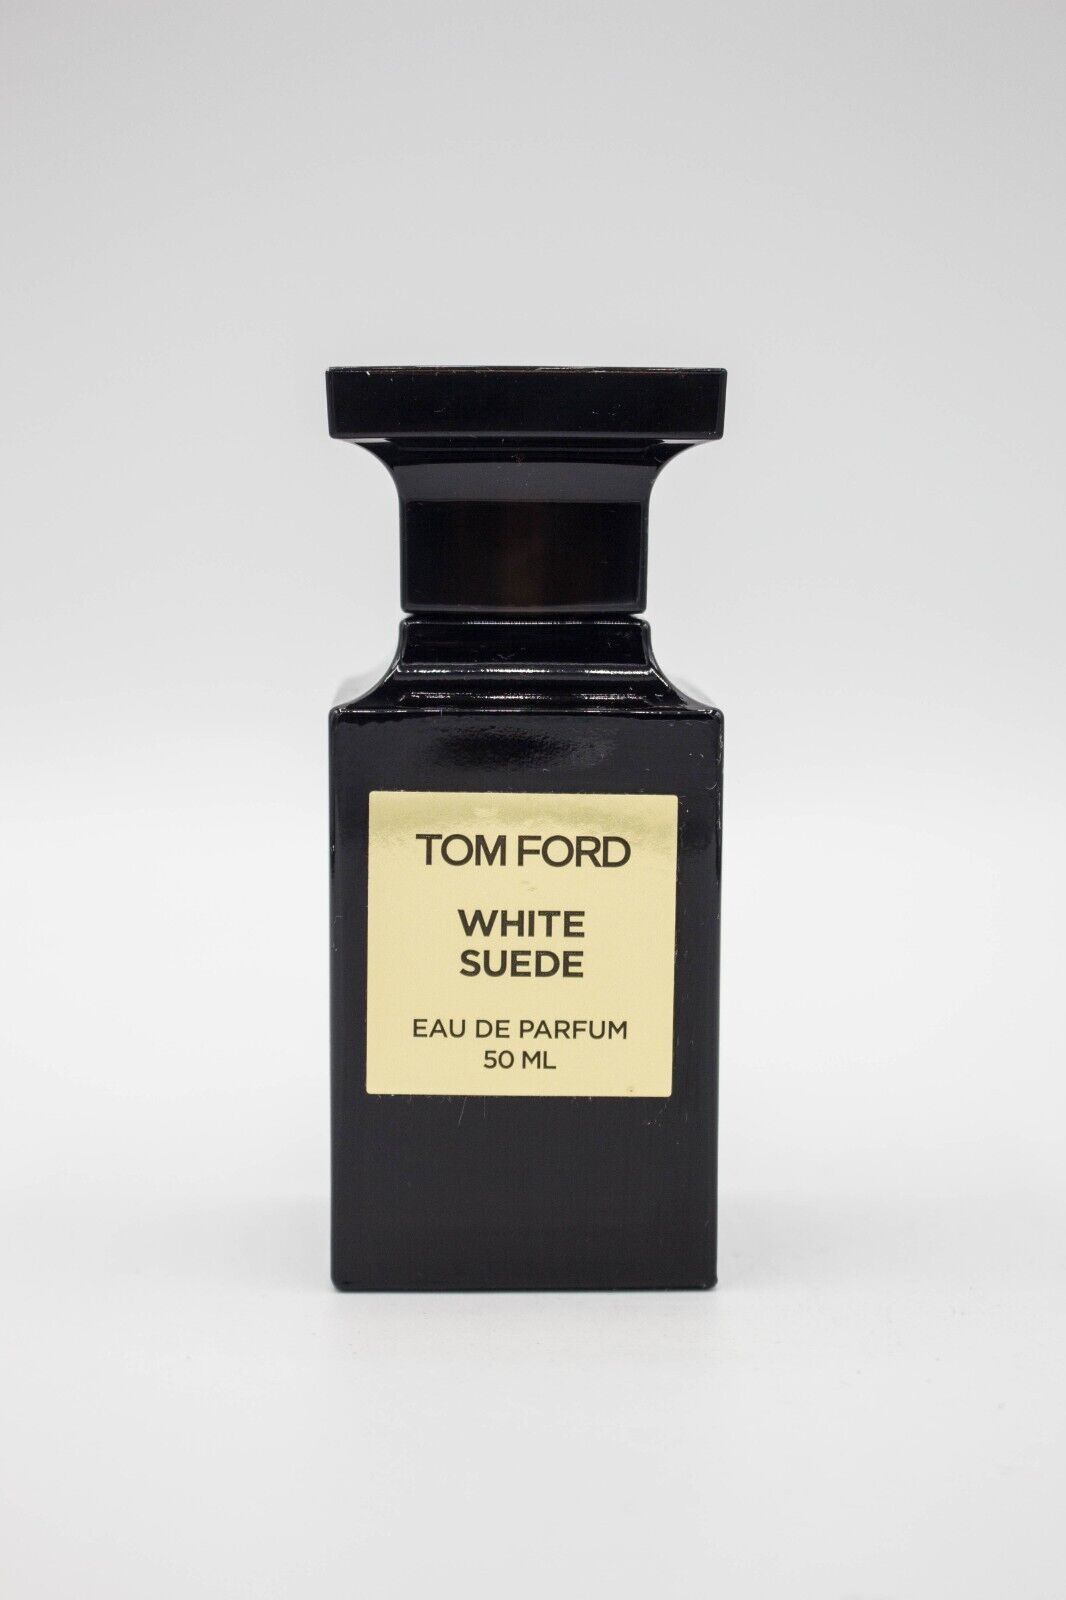 Tom Ford White Suede EDP 1.7 OZ / 50 ML EAU DE PARFUM SPRAY - VINTAGE -